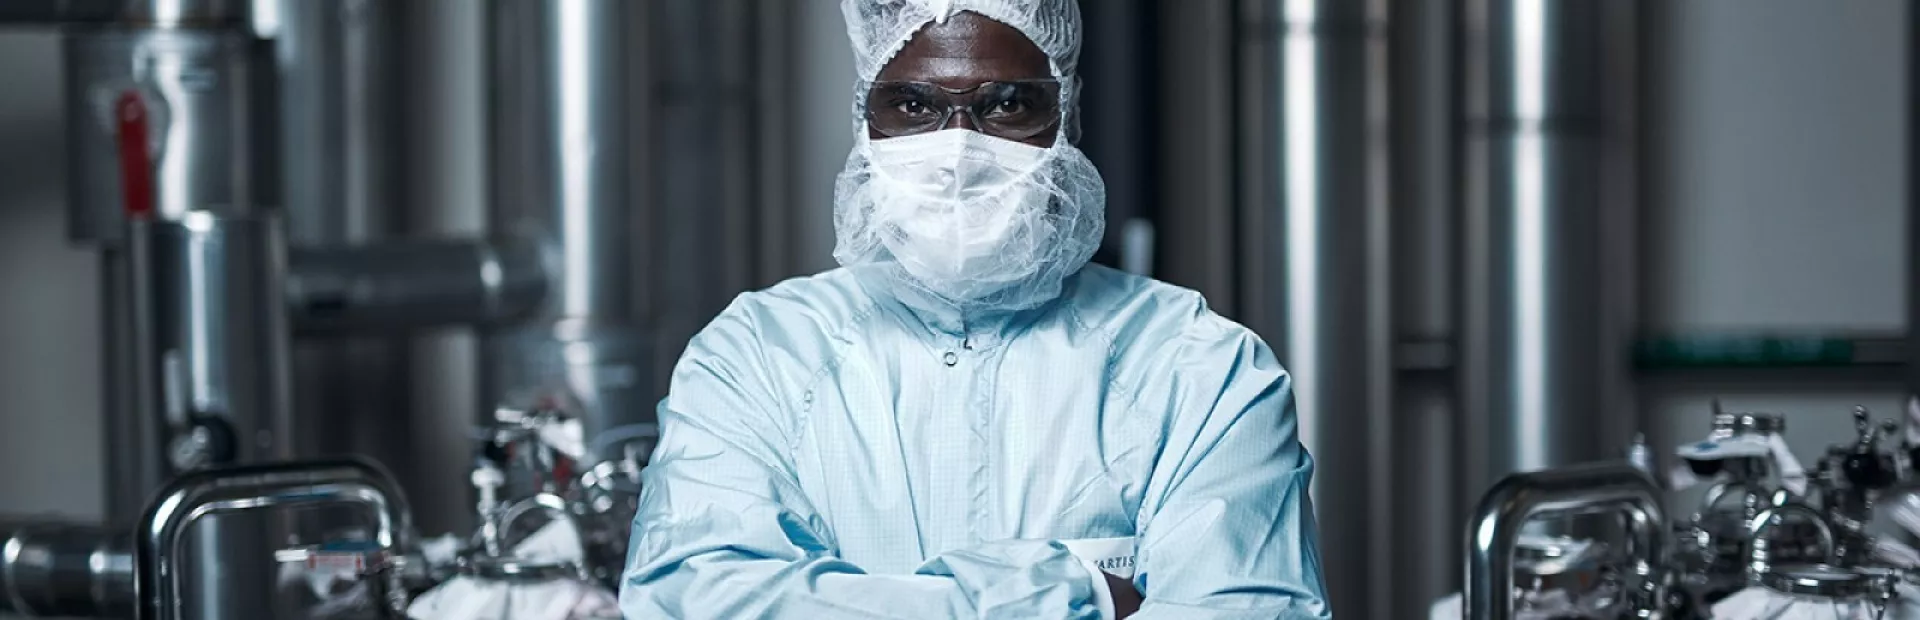 Novartis Employee in PPE